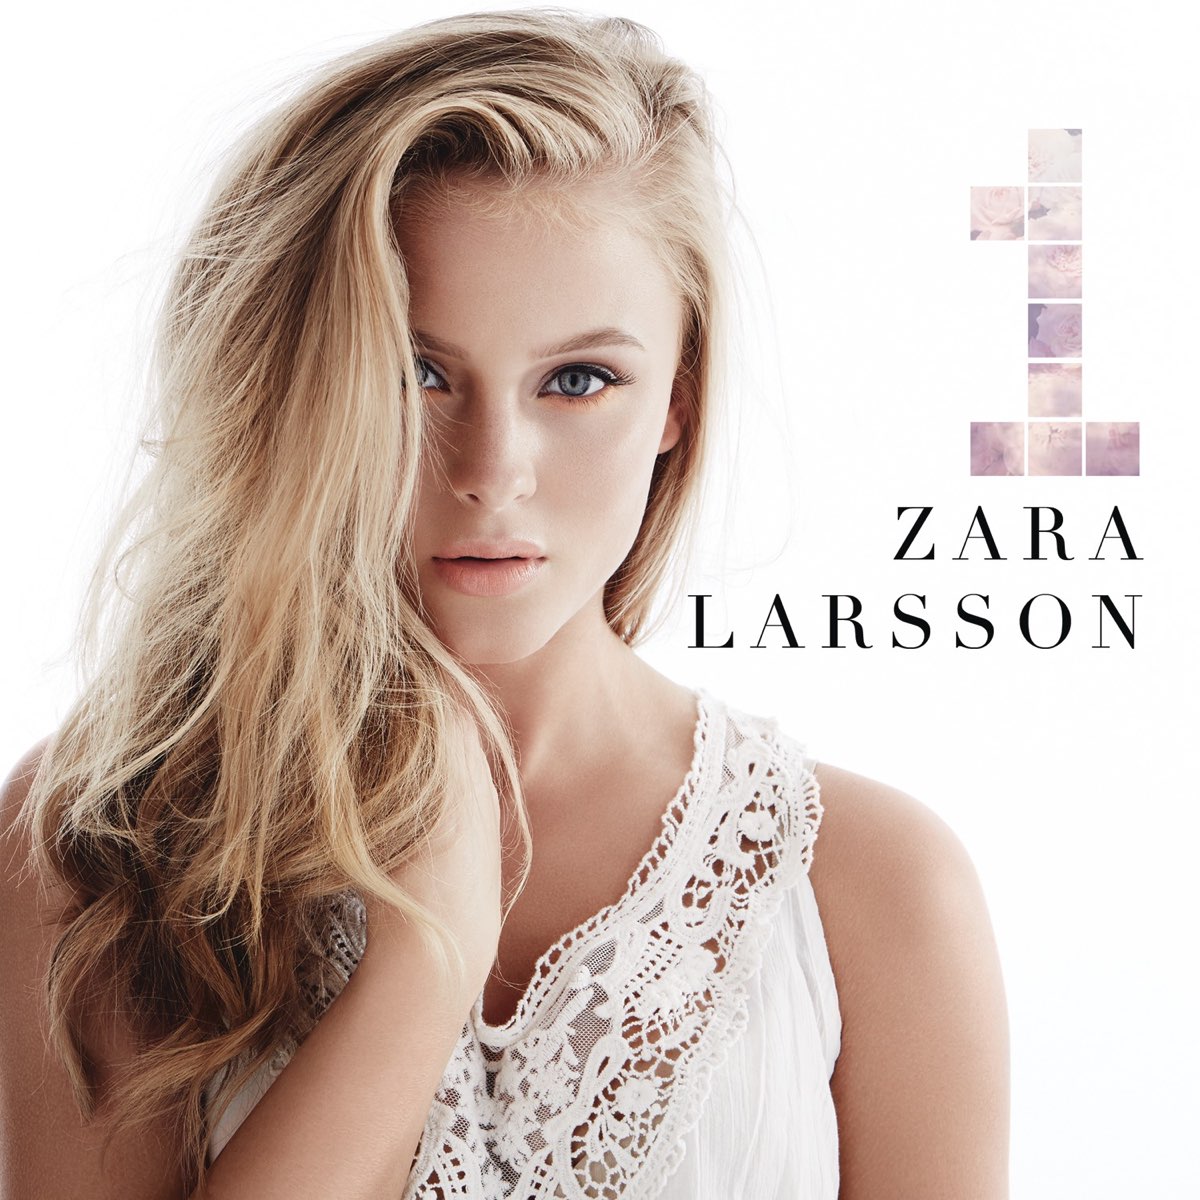 ‎1 by Zara Larsson on Apple Music